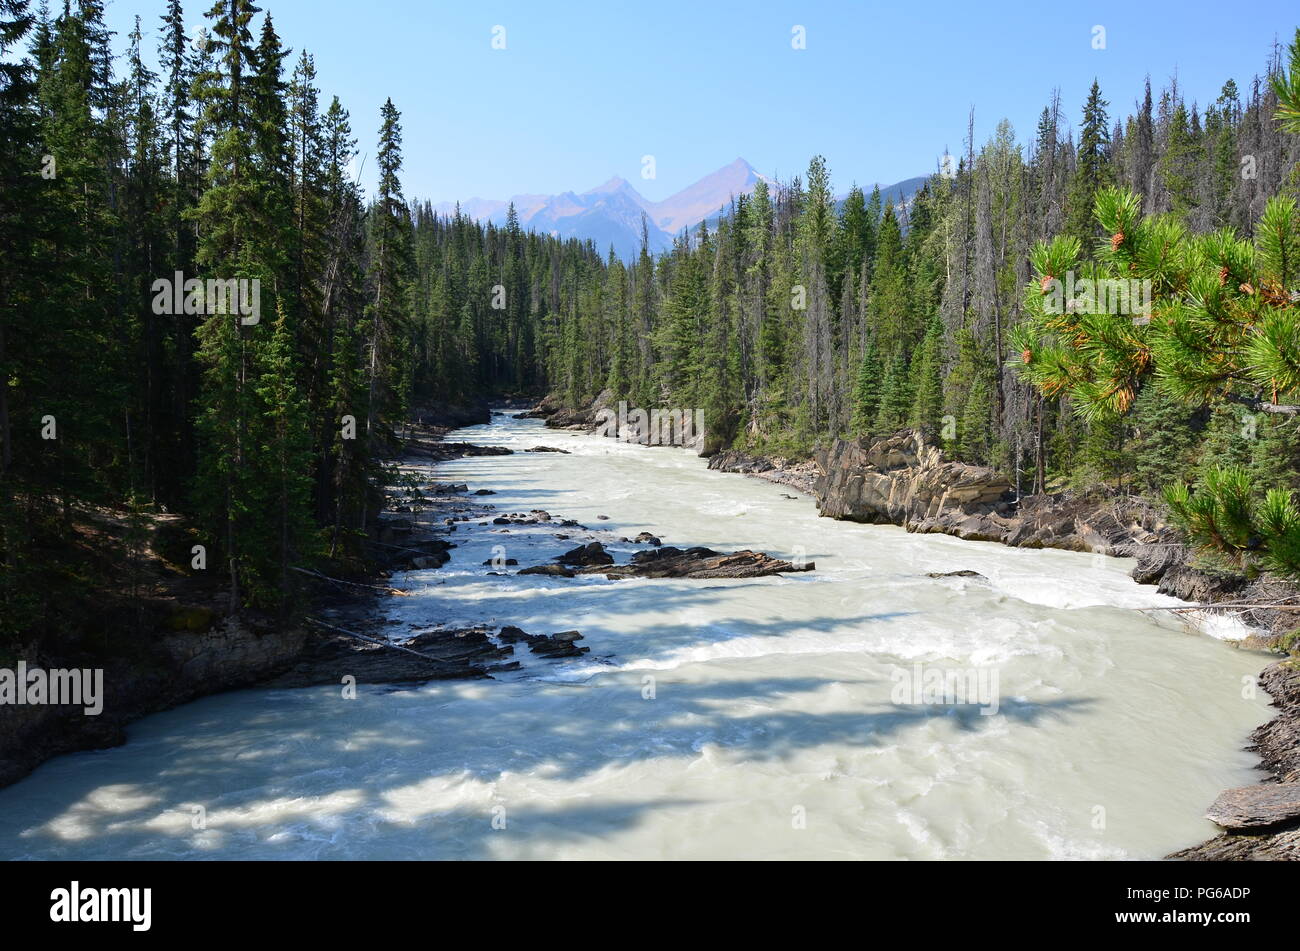 Mountain river The Kicking Horse River, British Columbia, Canada. Stock Photo